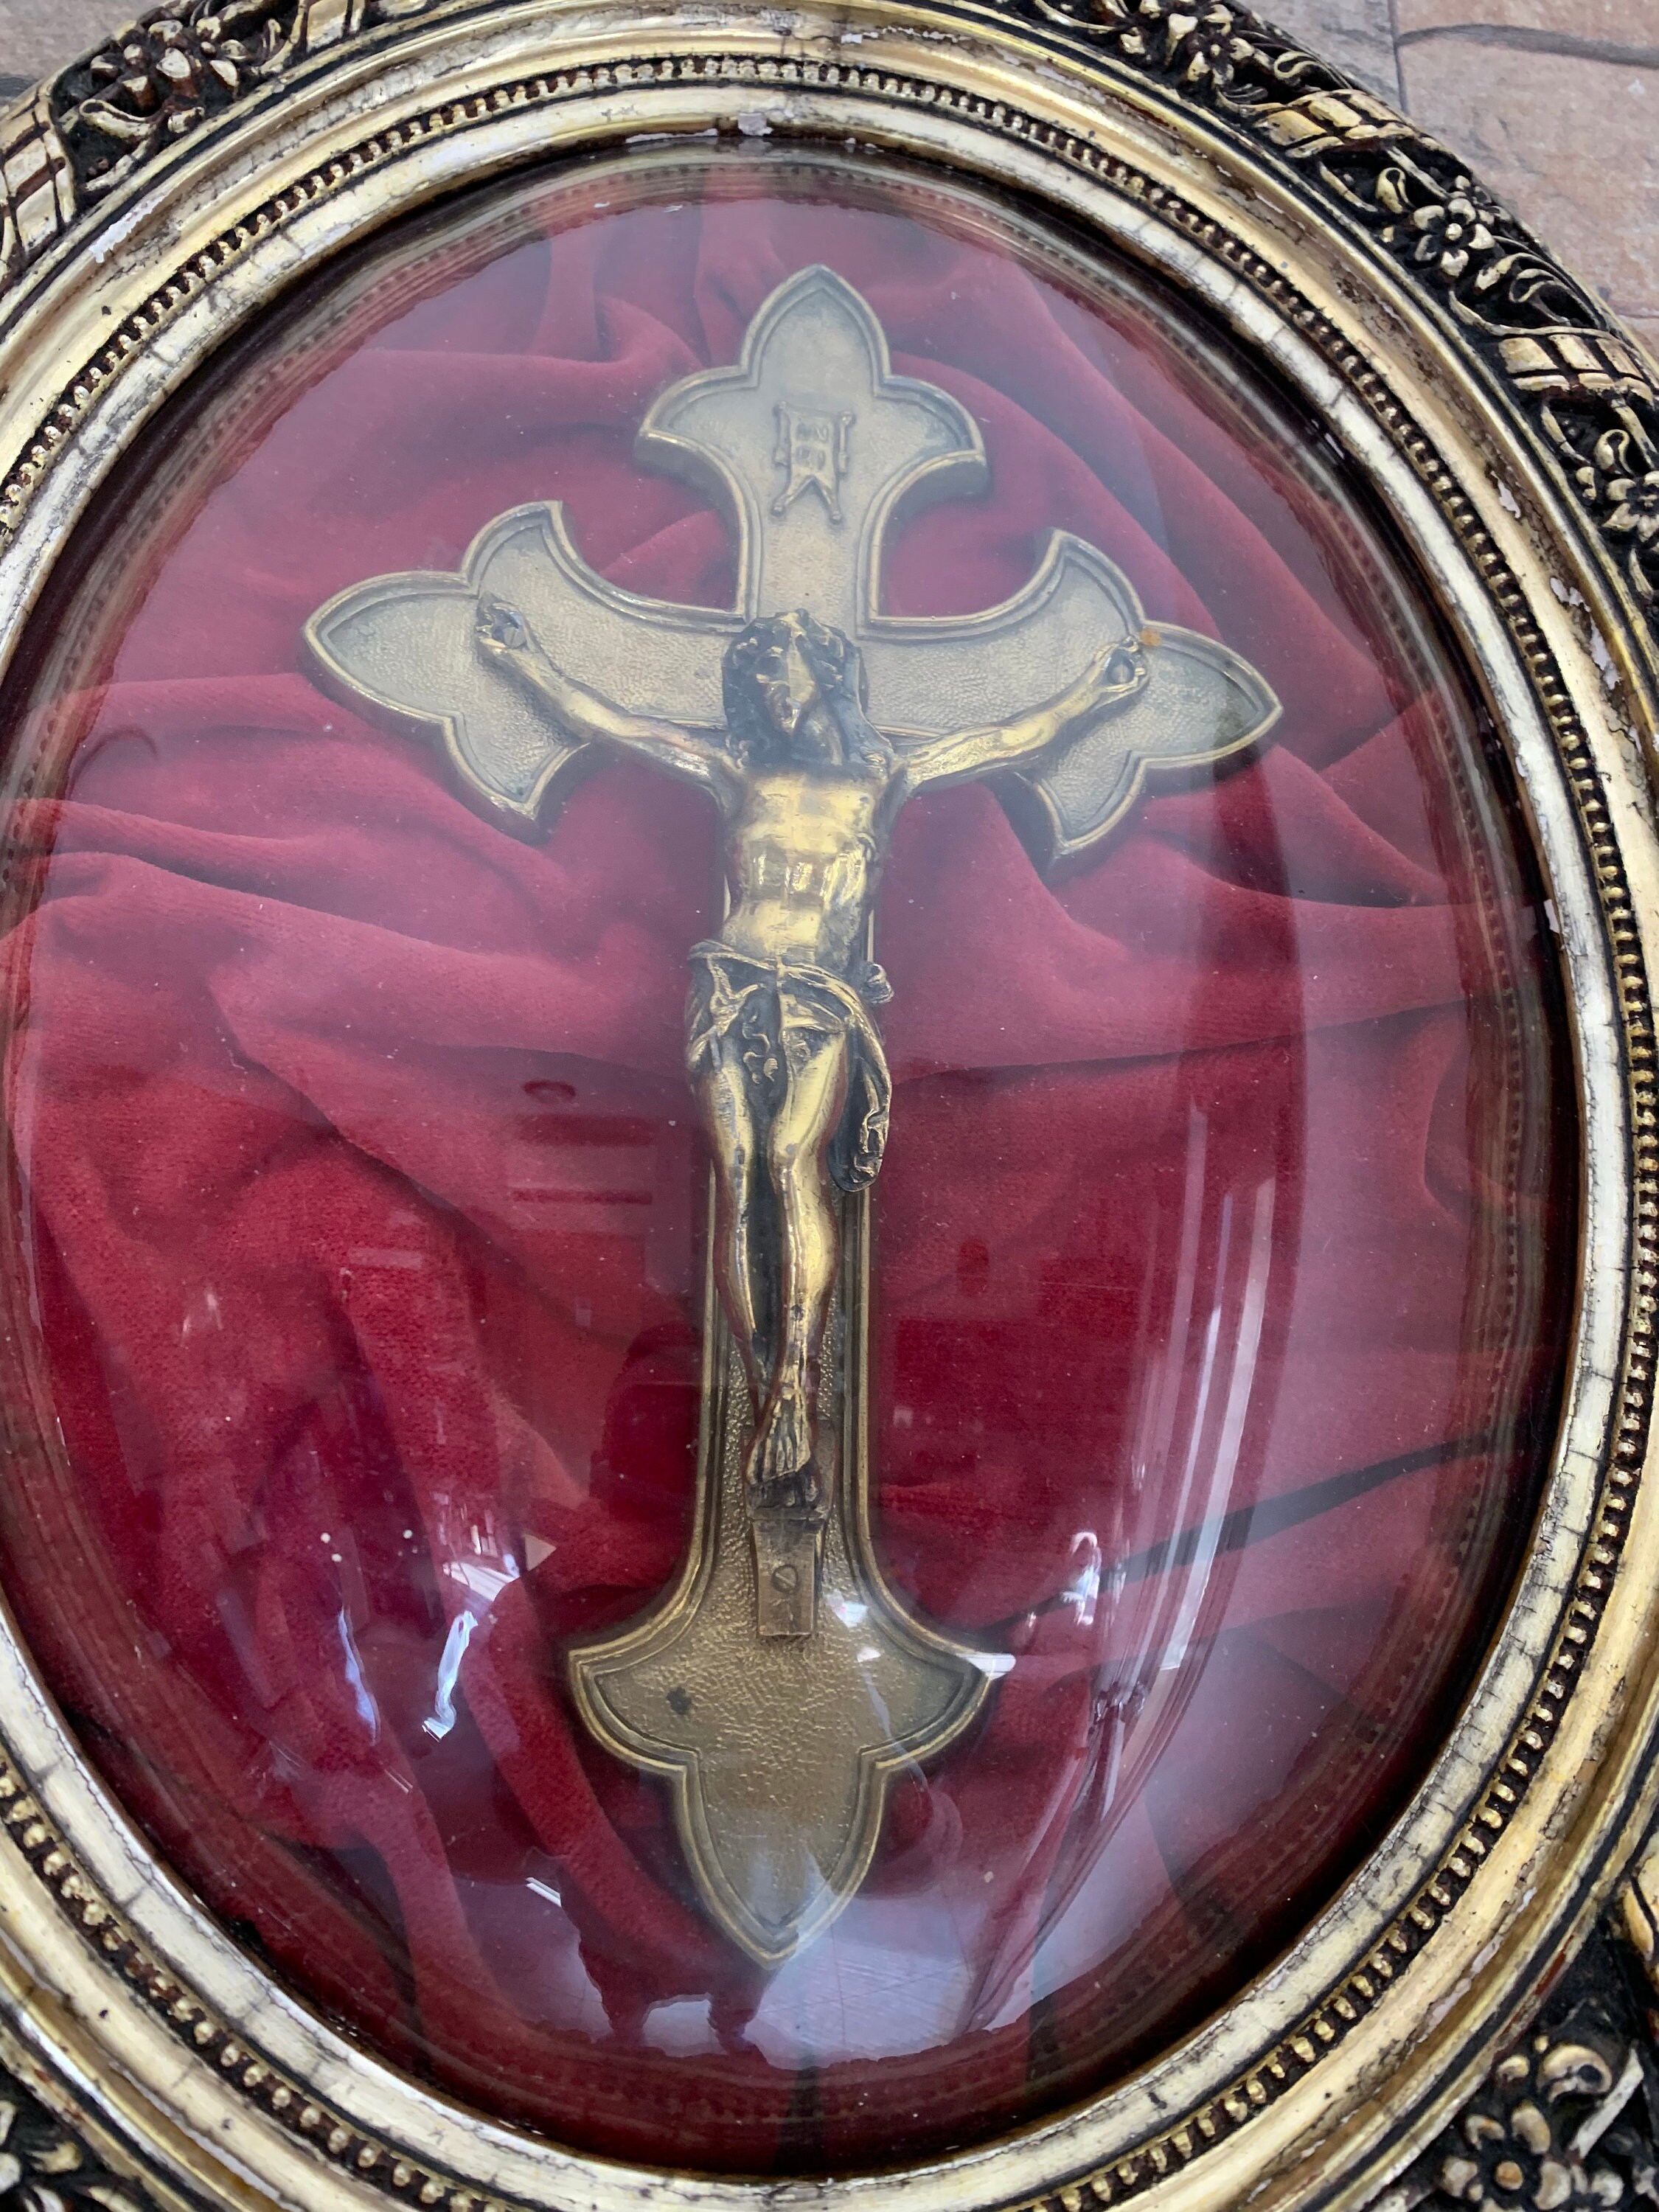 3-Way Crucifix - Antique Silvertone - 360 [360] - $1.24 USD : Ave